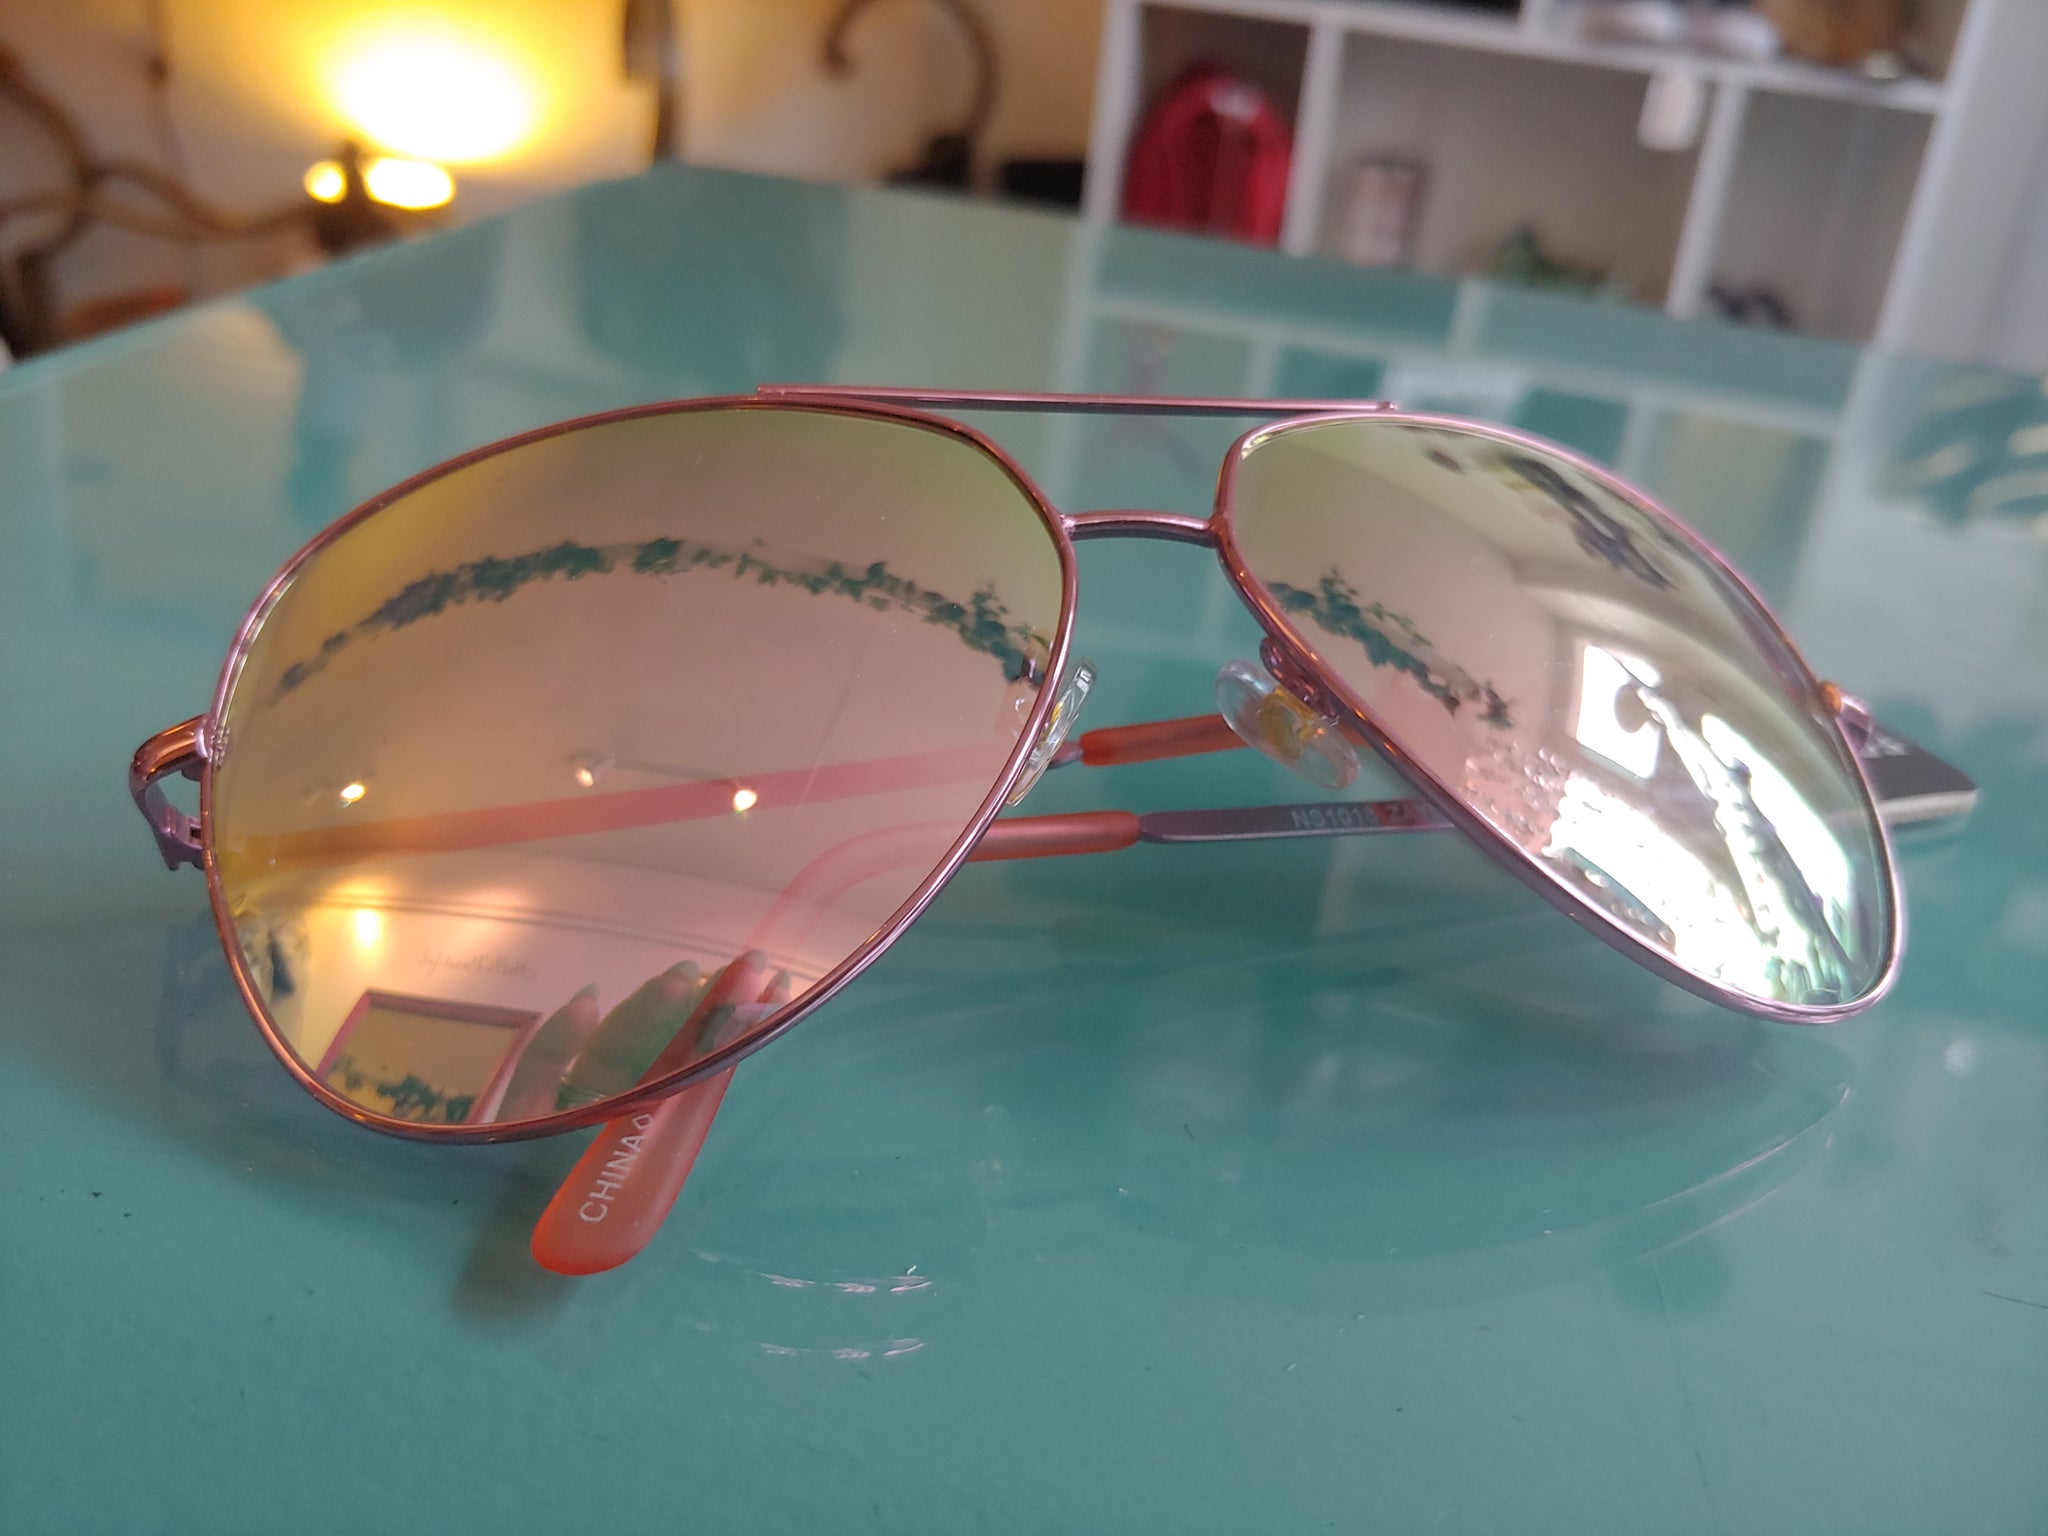 Pink Reflective Aviator Sunglasses